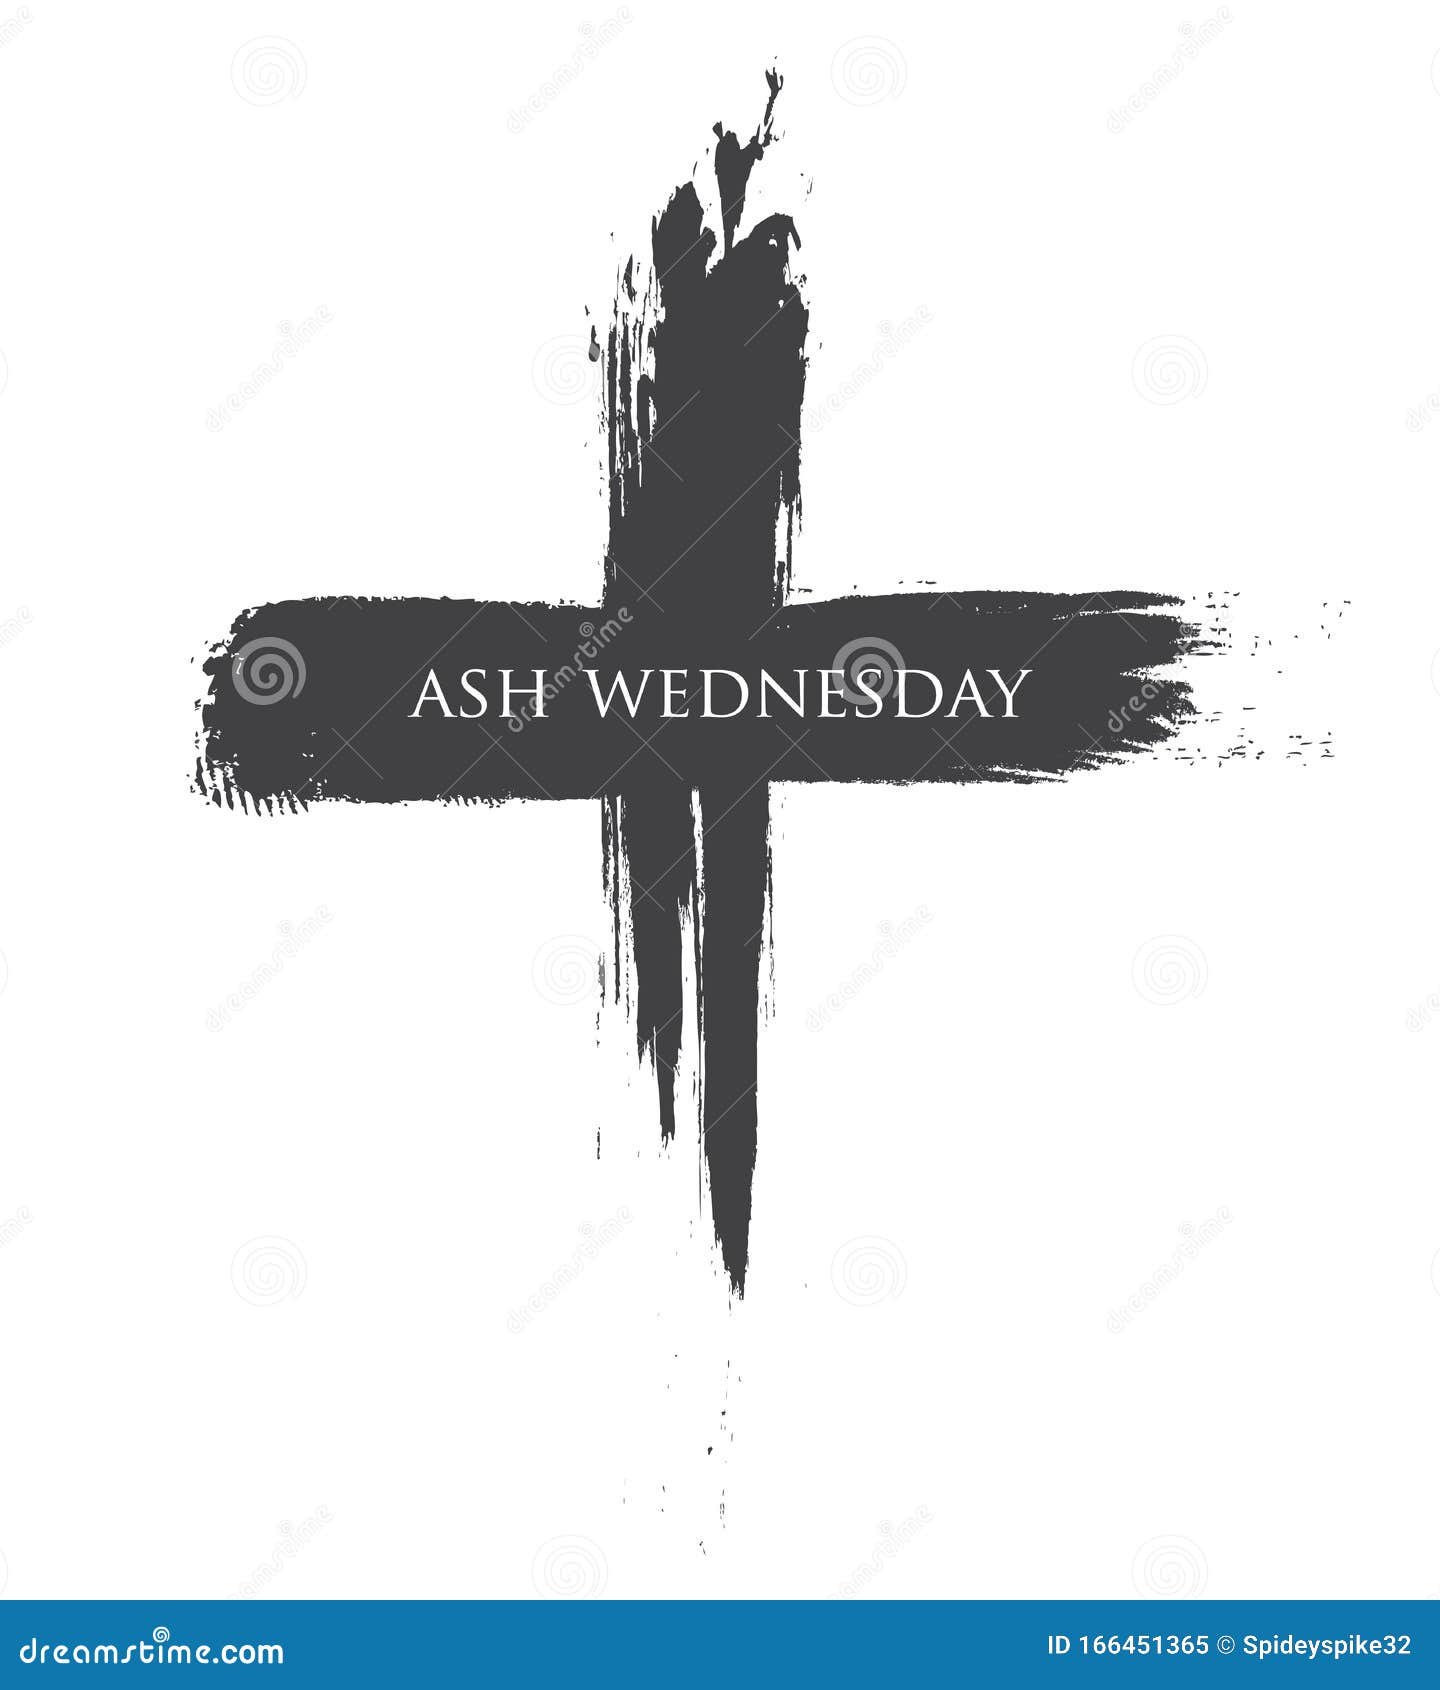 the black cross of ash wednesday